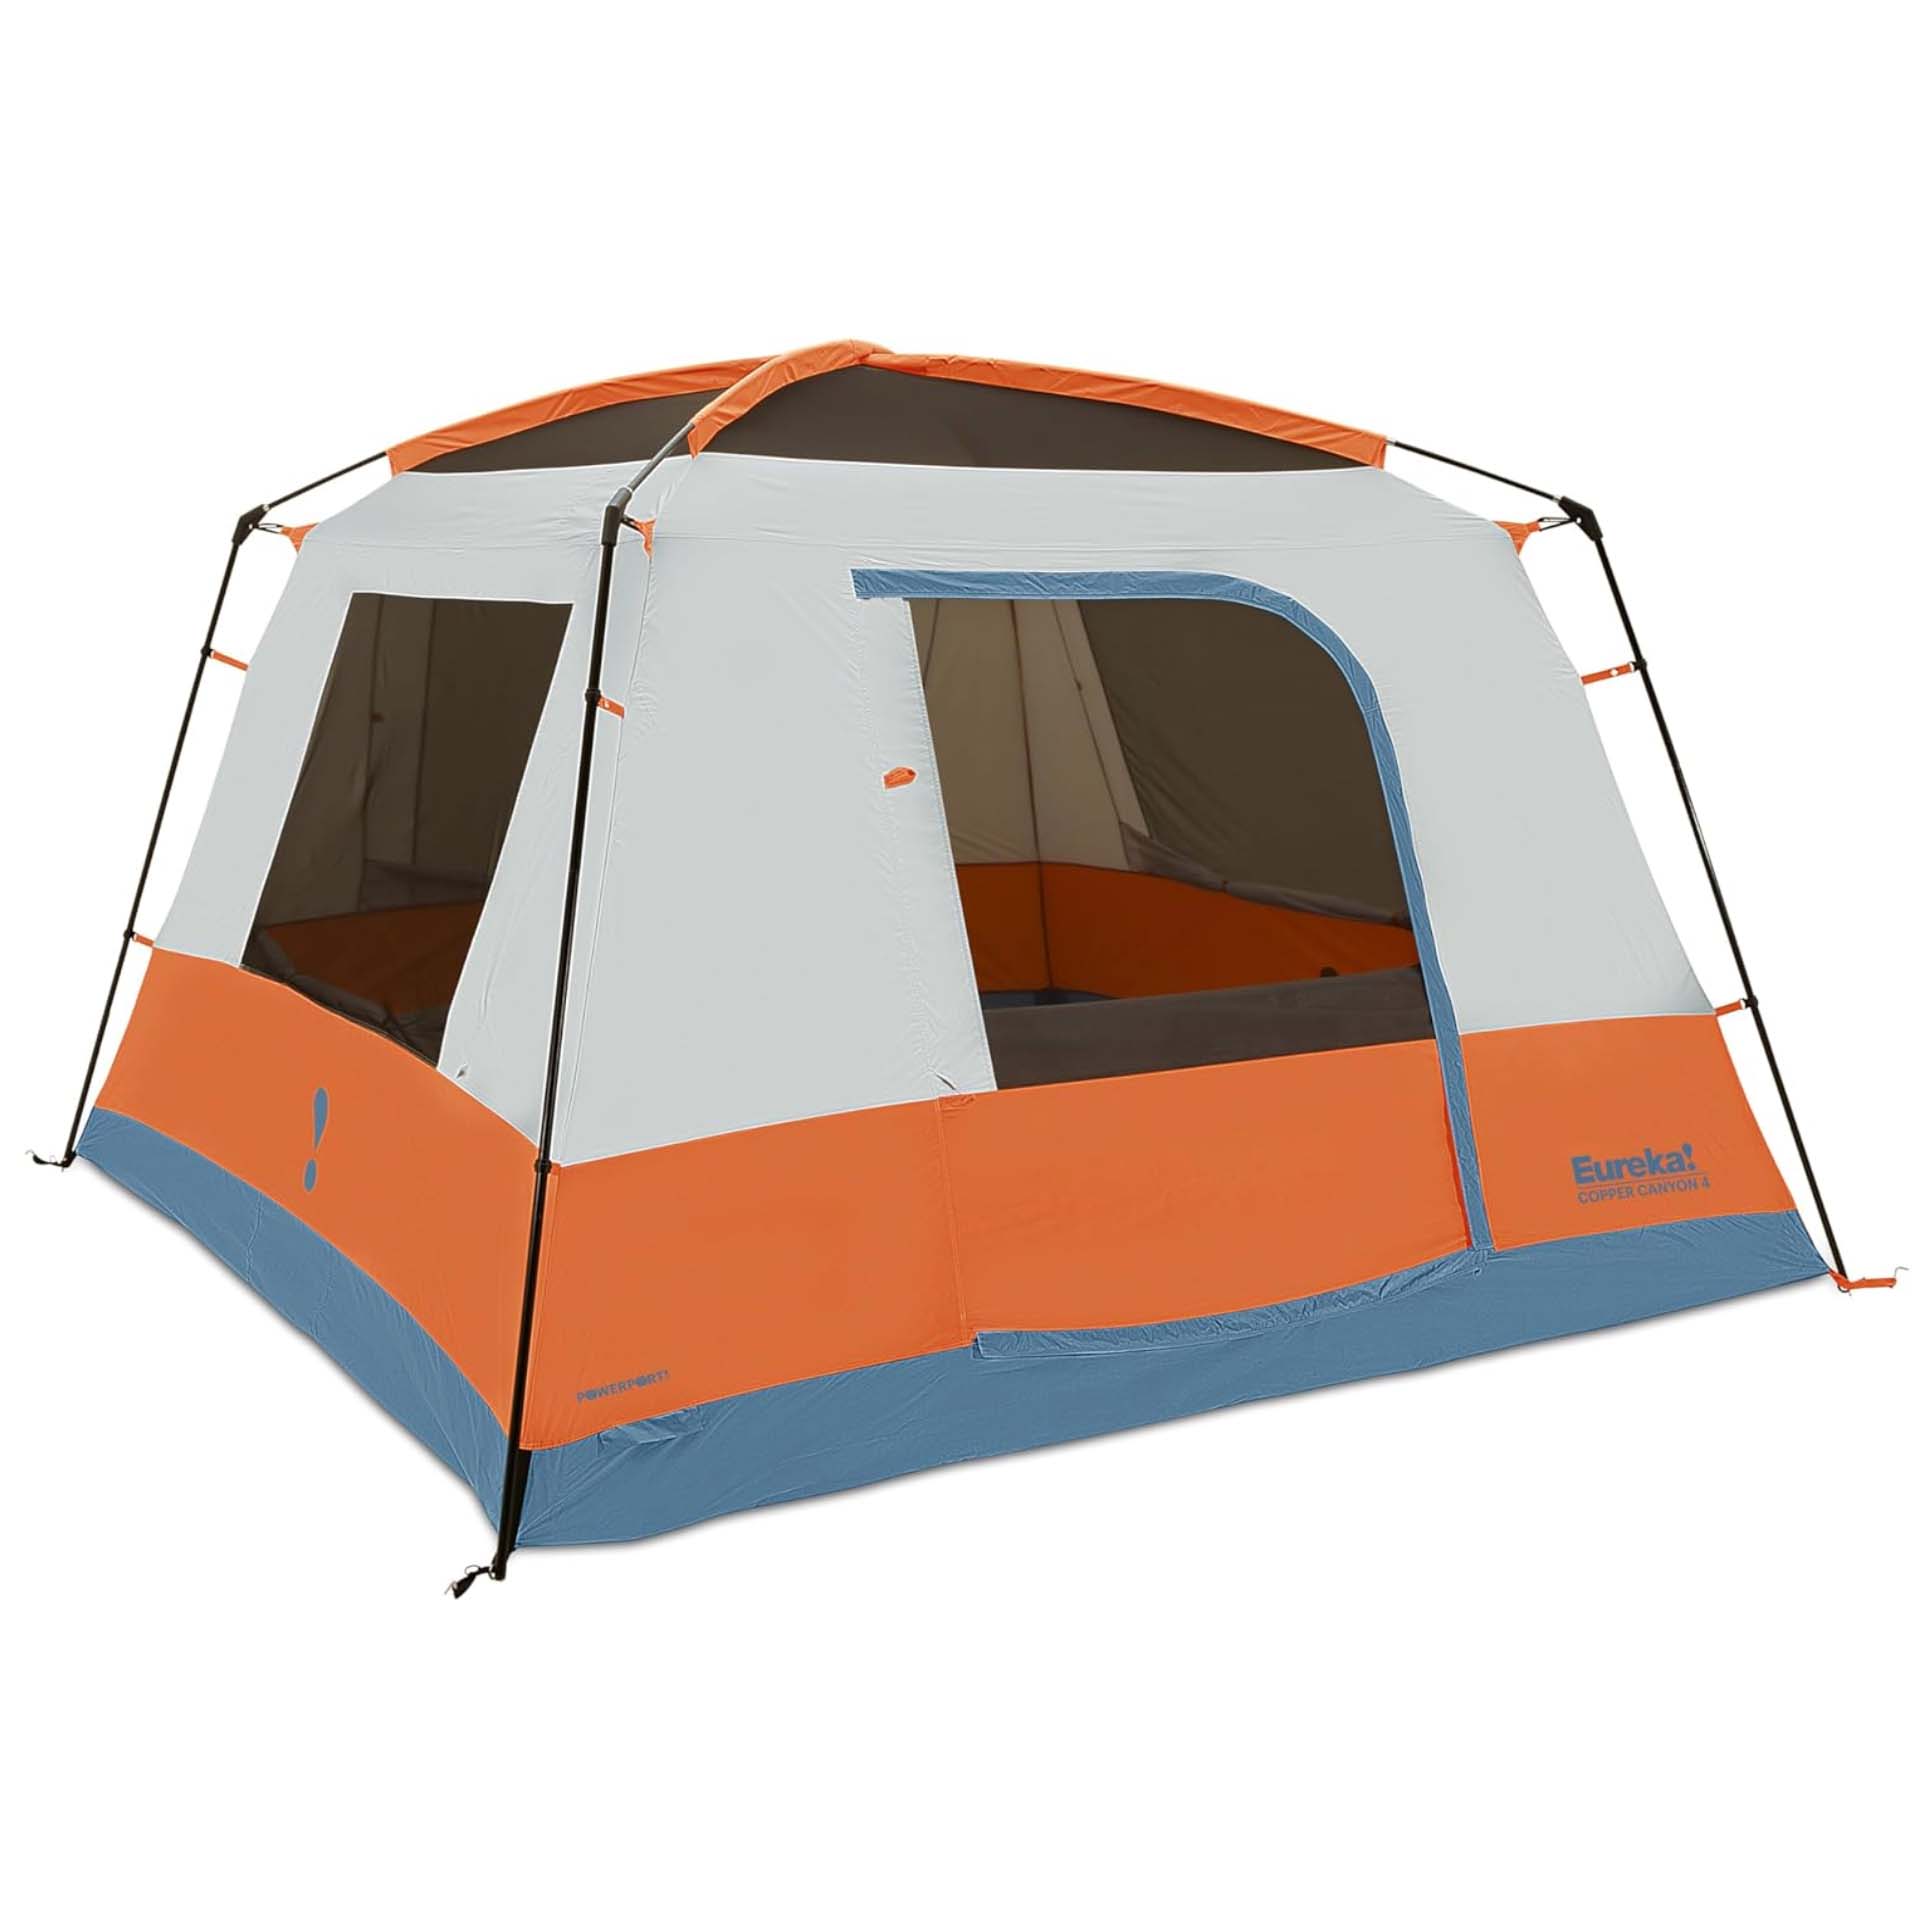 Grey and orange Eureka! Copper Canyon LX tent